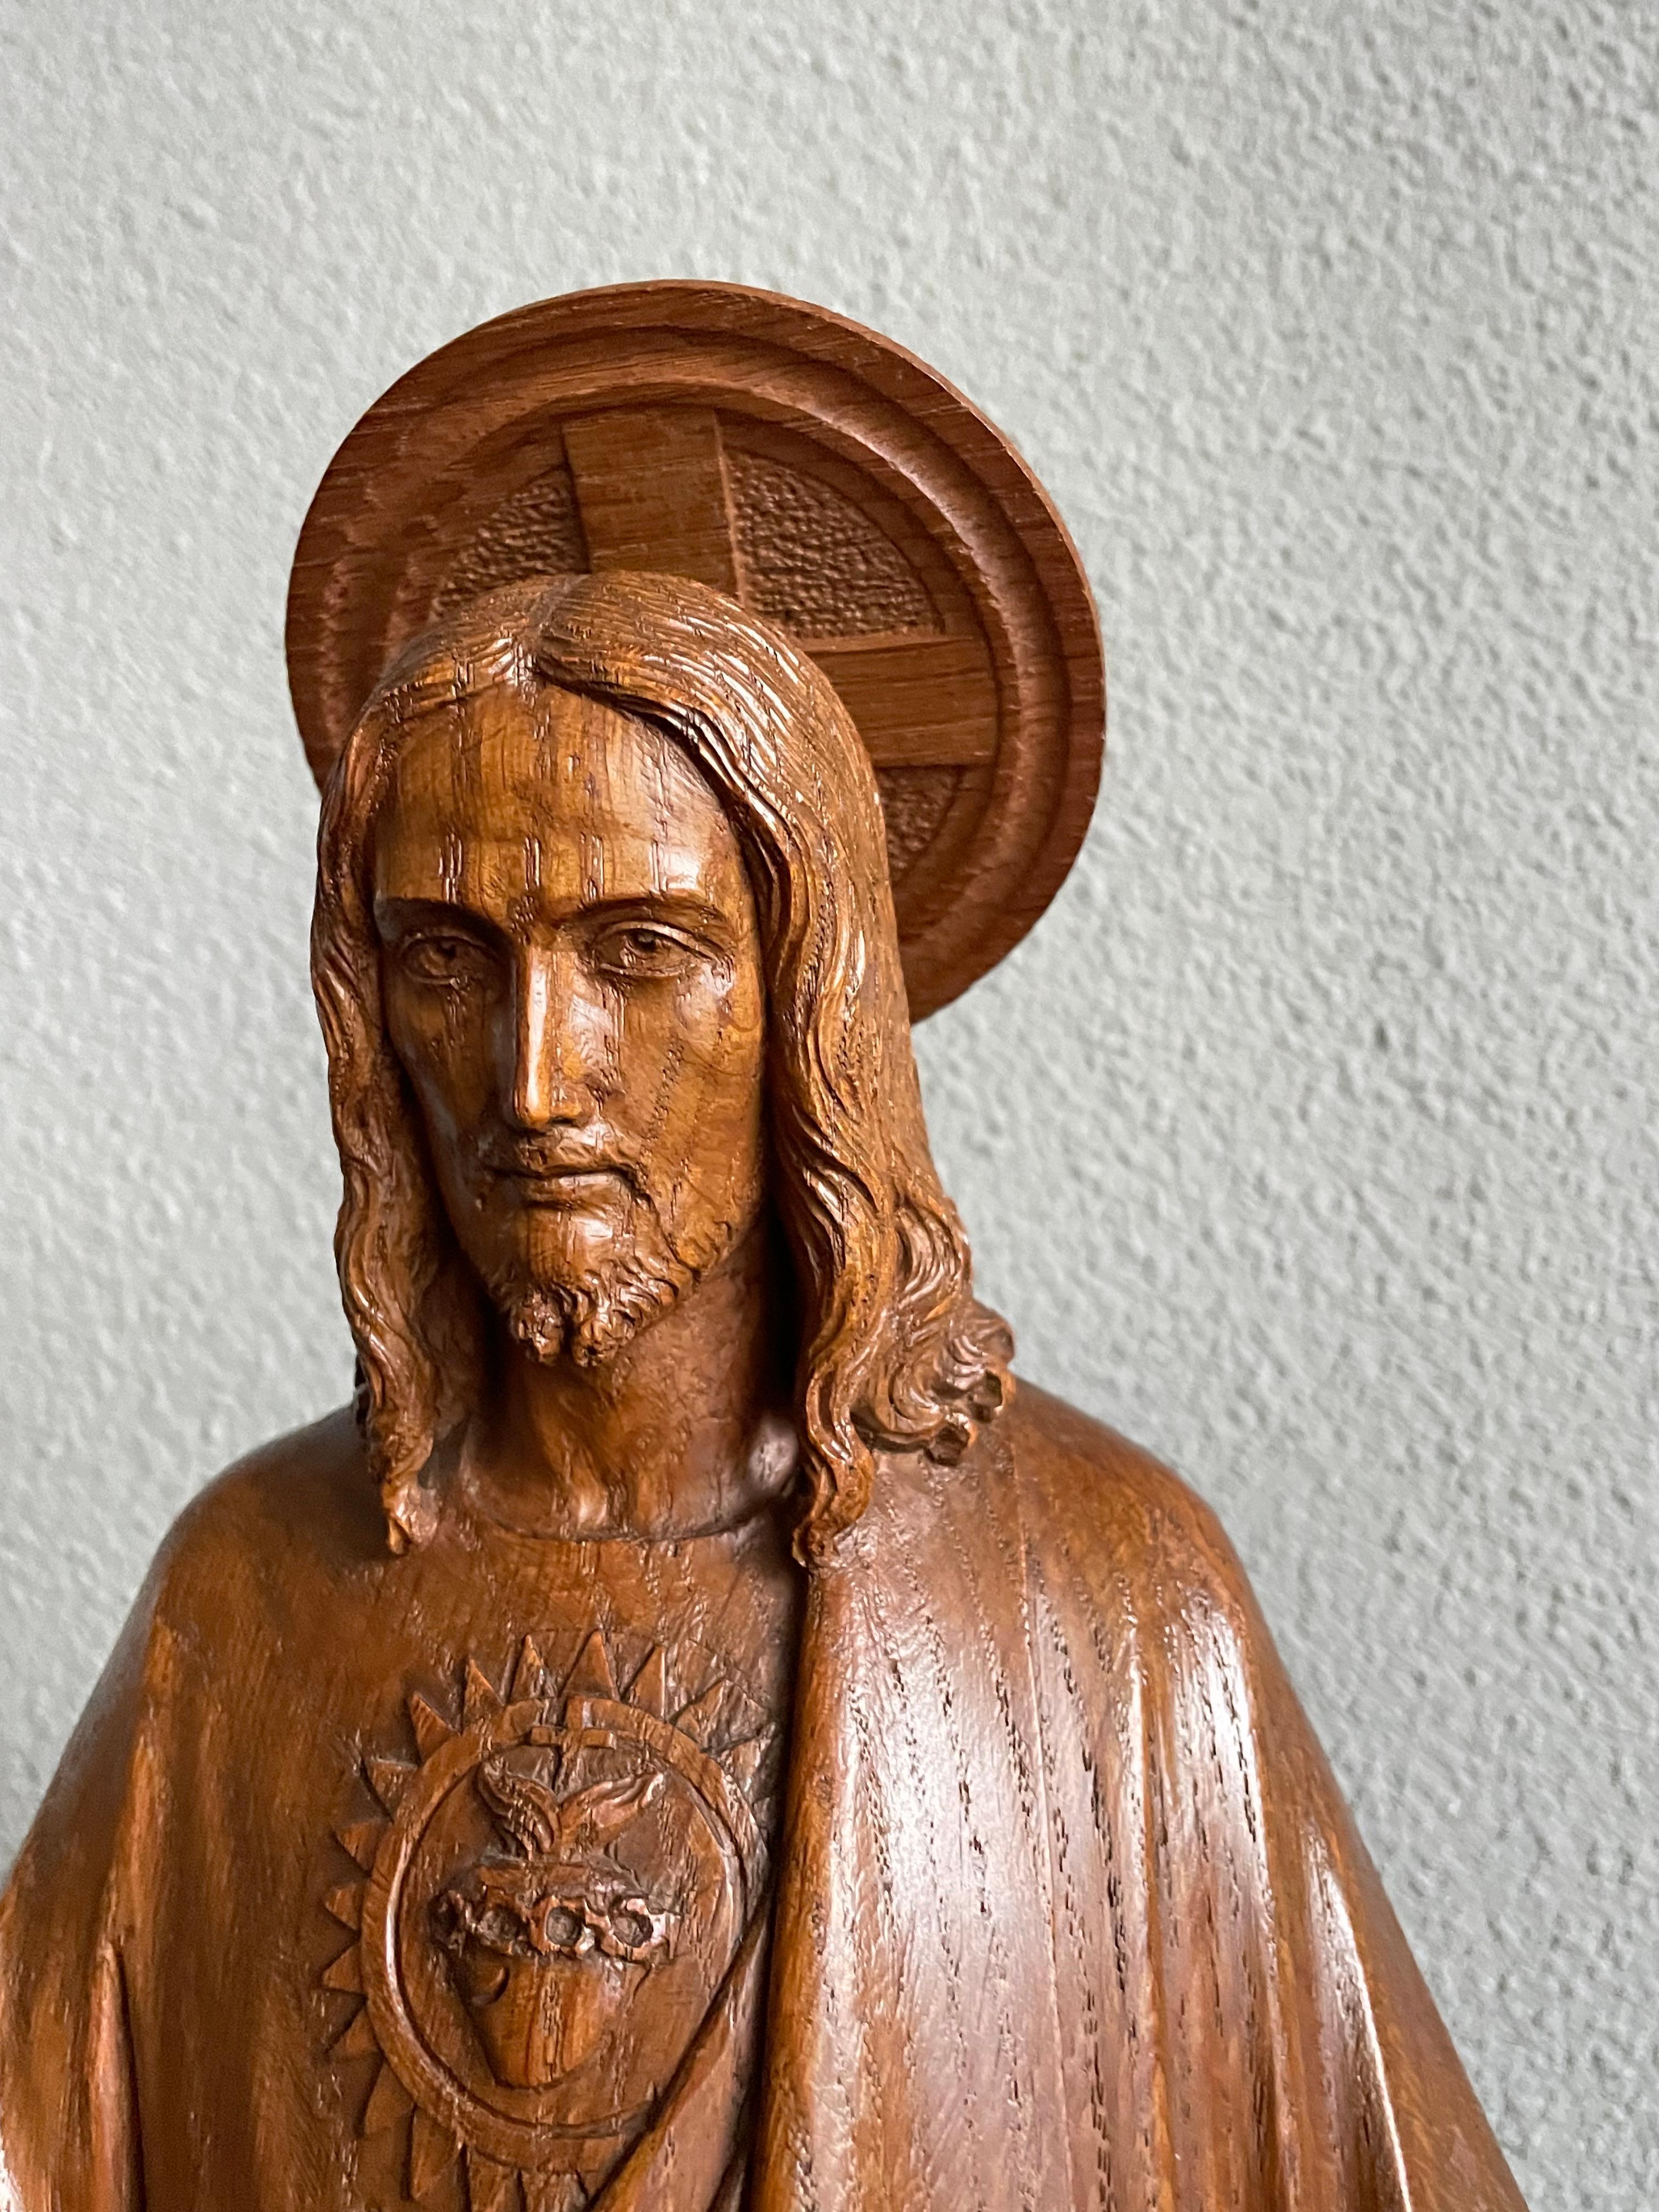 European Antique & Stunning, Hand Carved Wooden Sacred Heart of Christ Sculpture / Statue